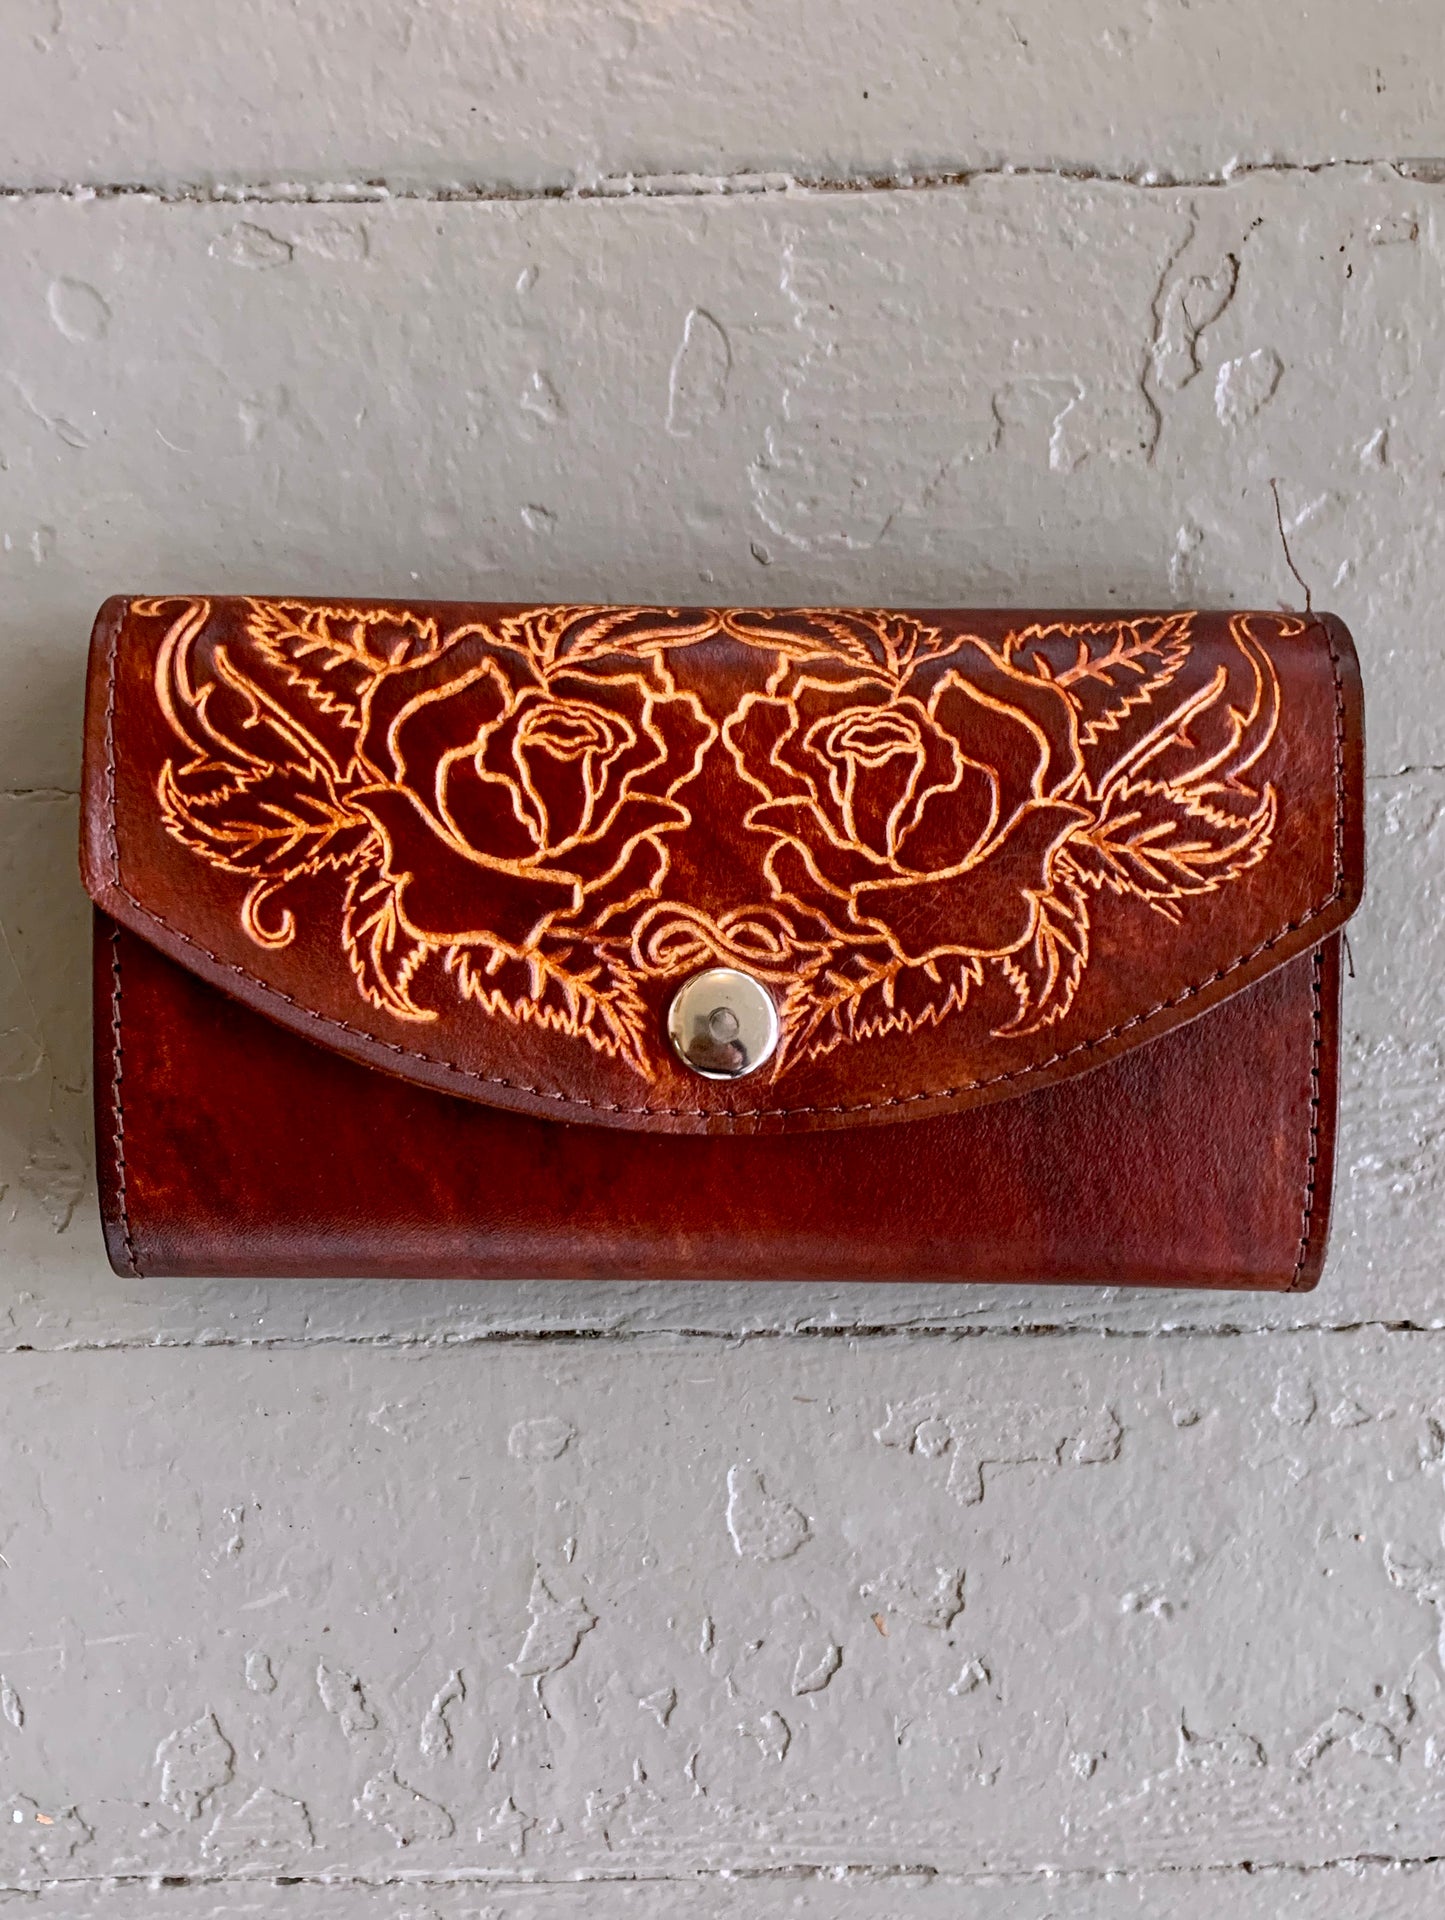 Desert Rose Leather Wallet Clutch